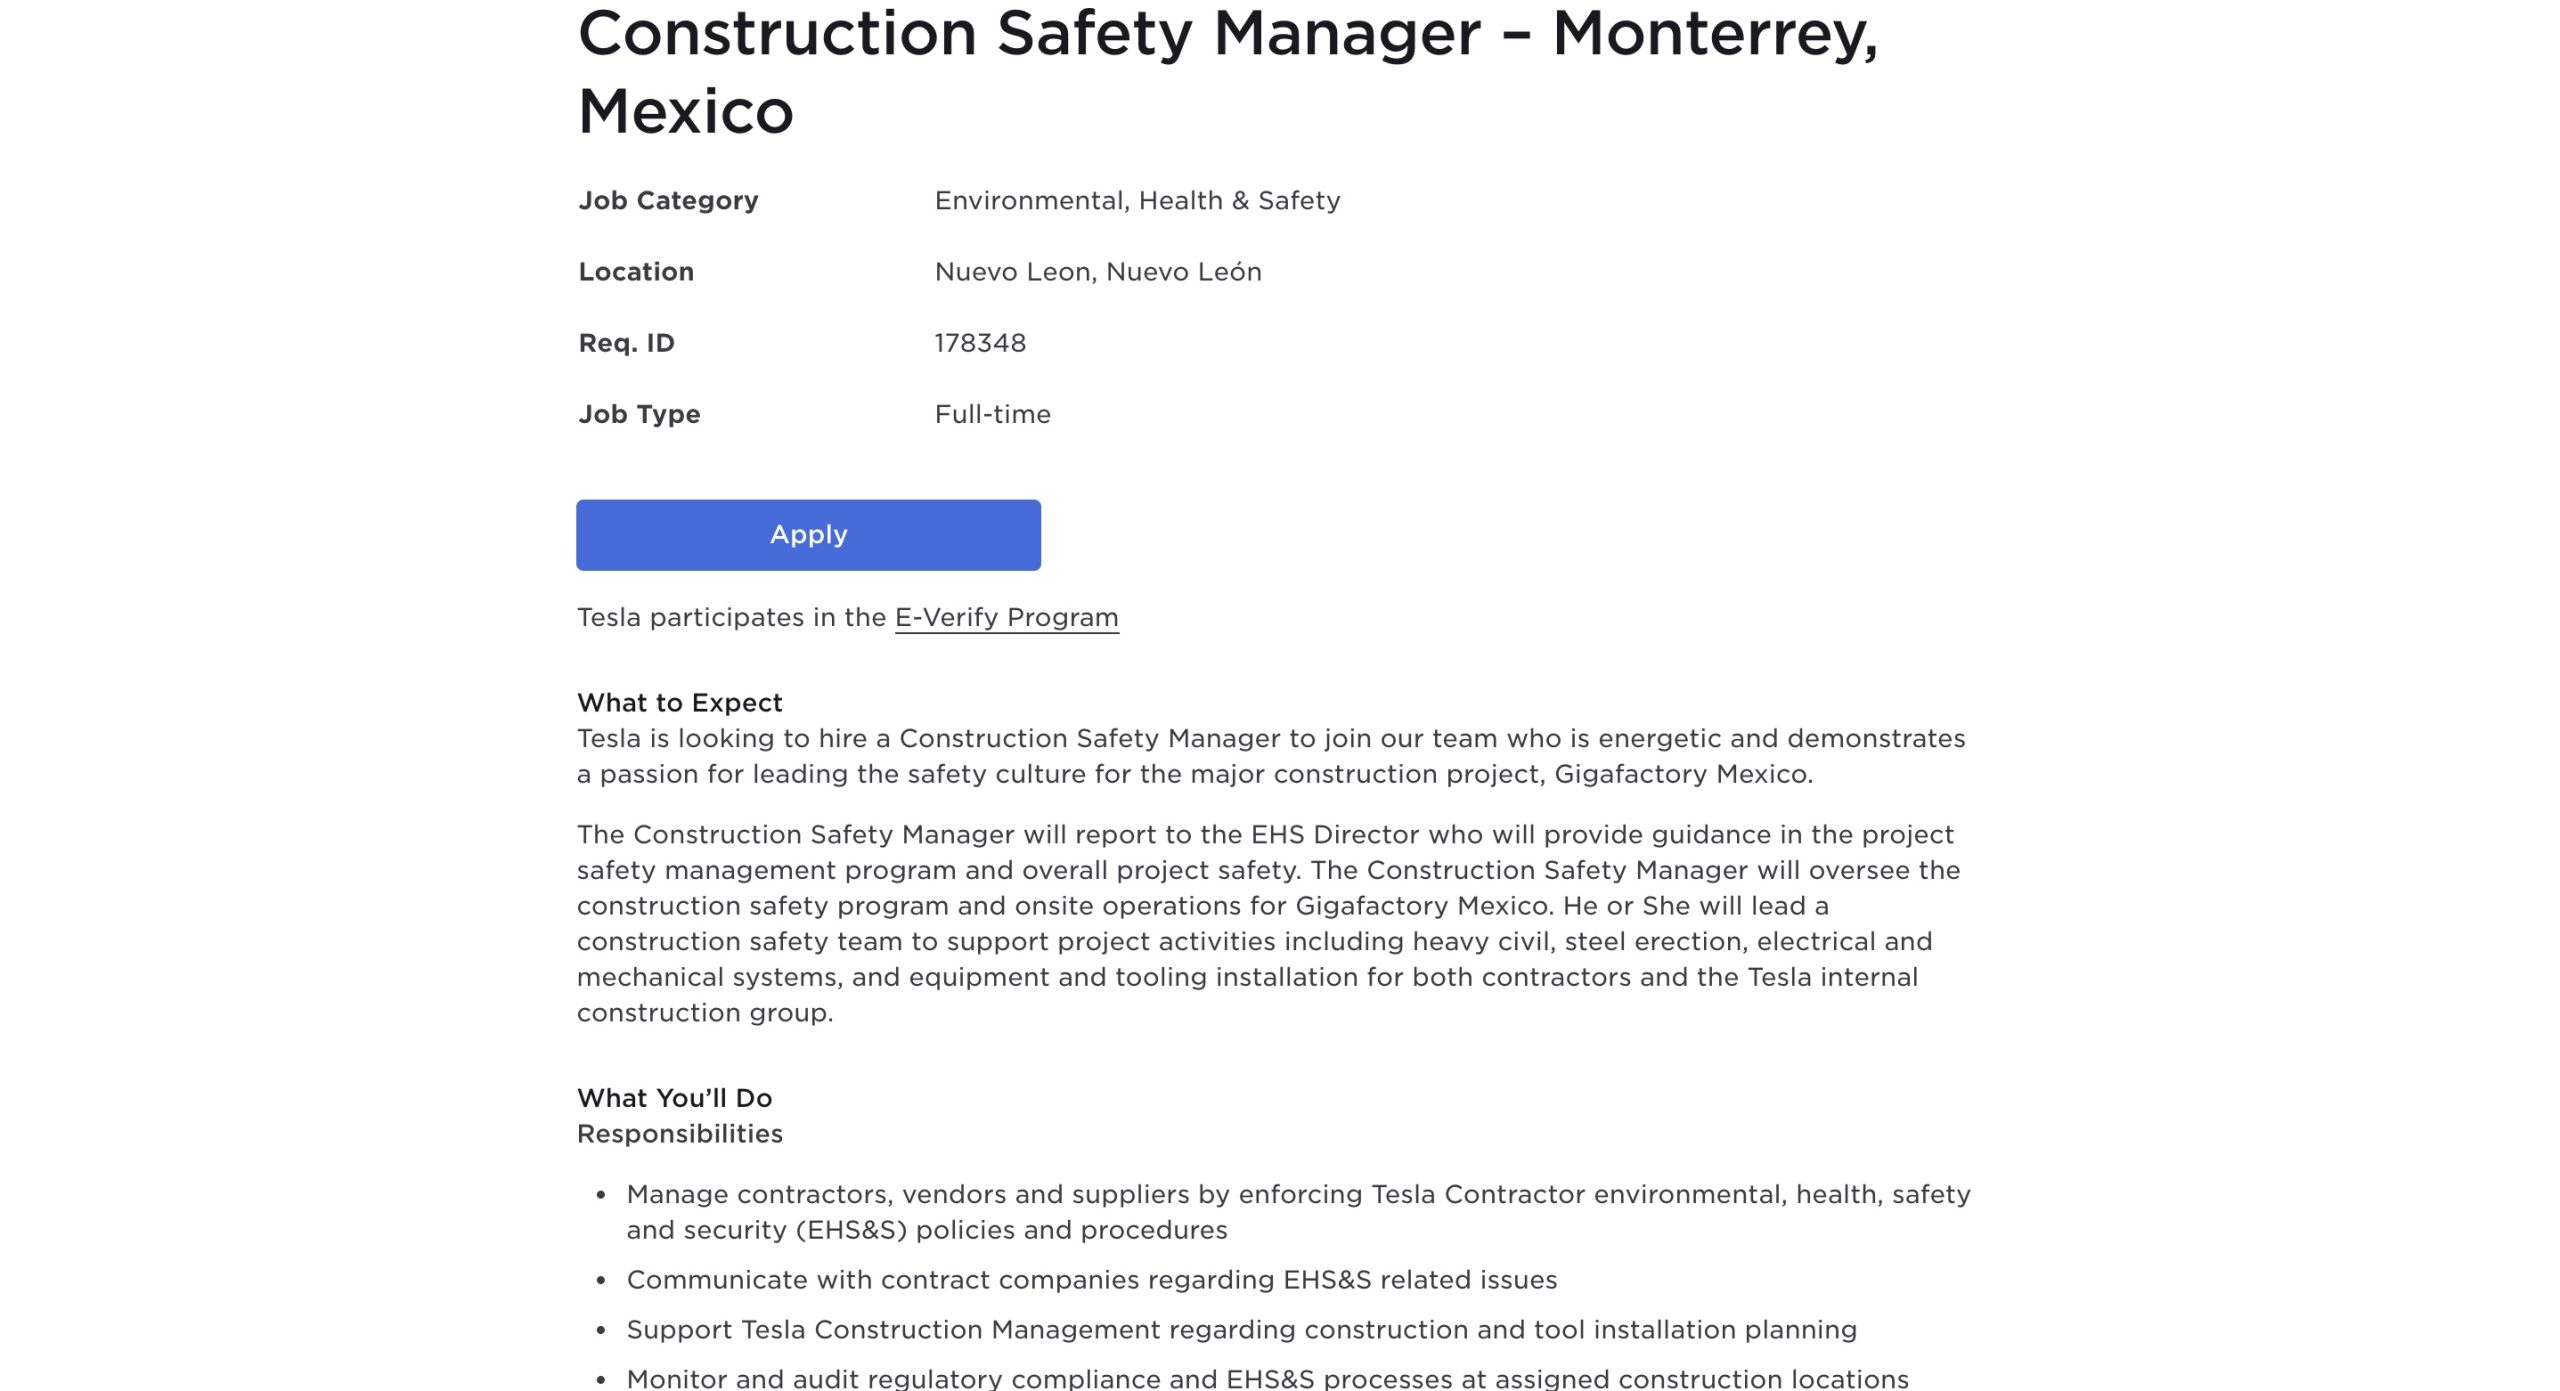 giga-mexico-construction-safety-manager